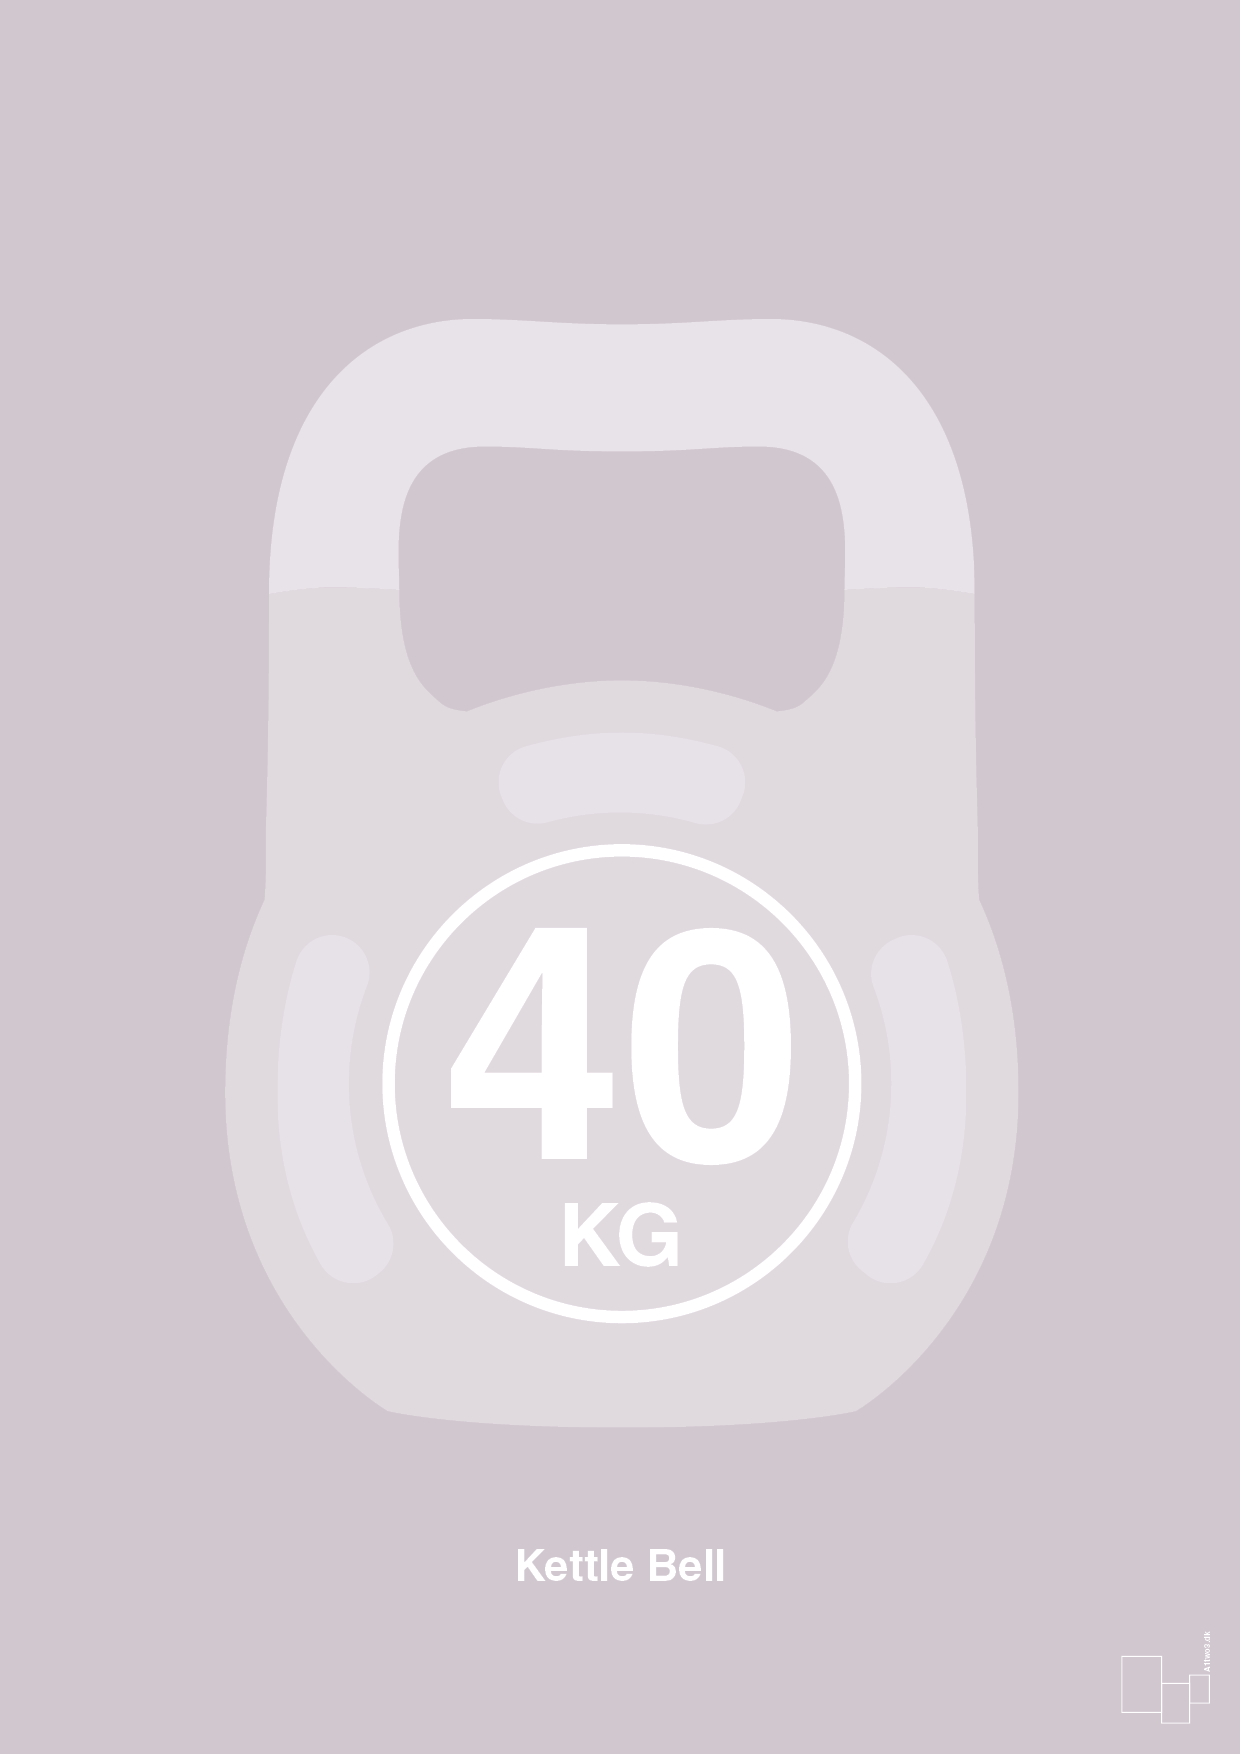 kettle bell 40 kg - Plakat med Grafik i Dusty Lilac